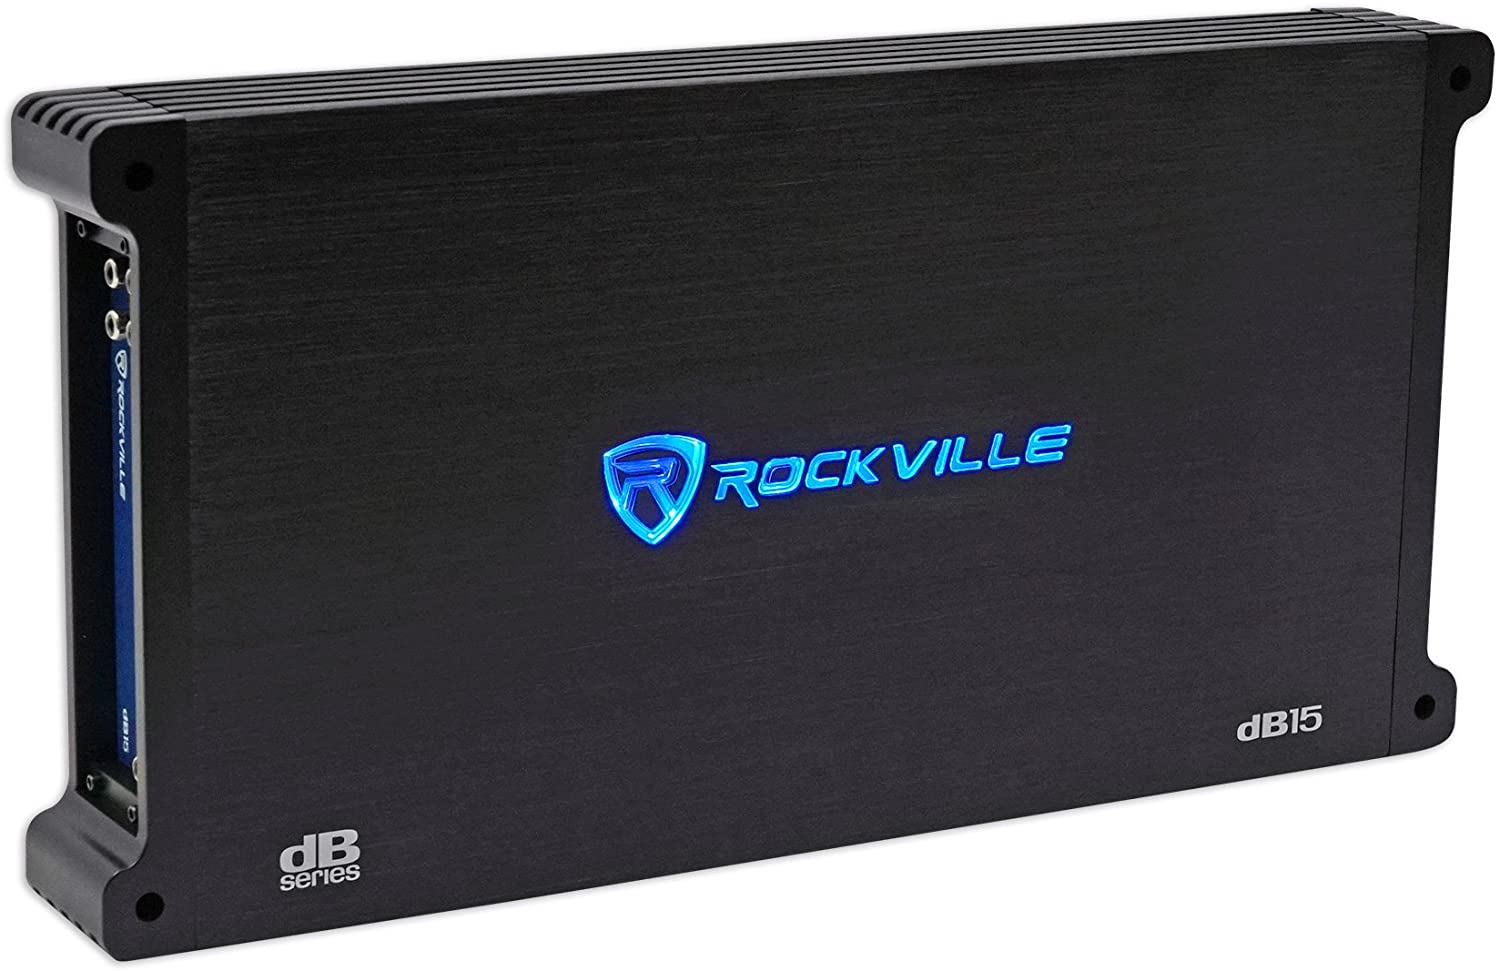 Rockville Car Subwoofer amplifier